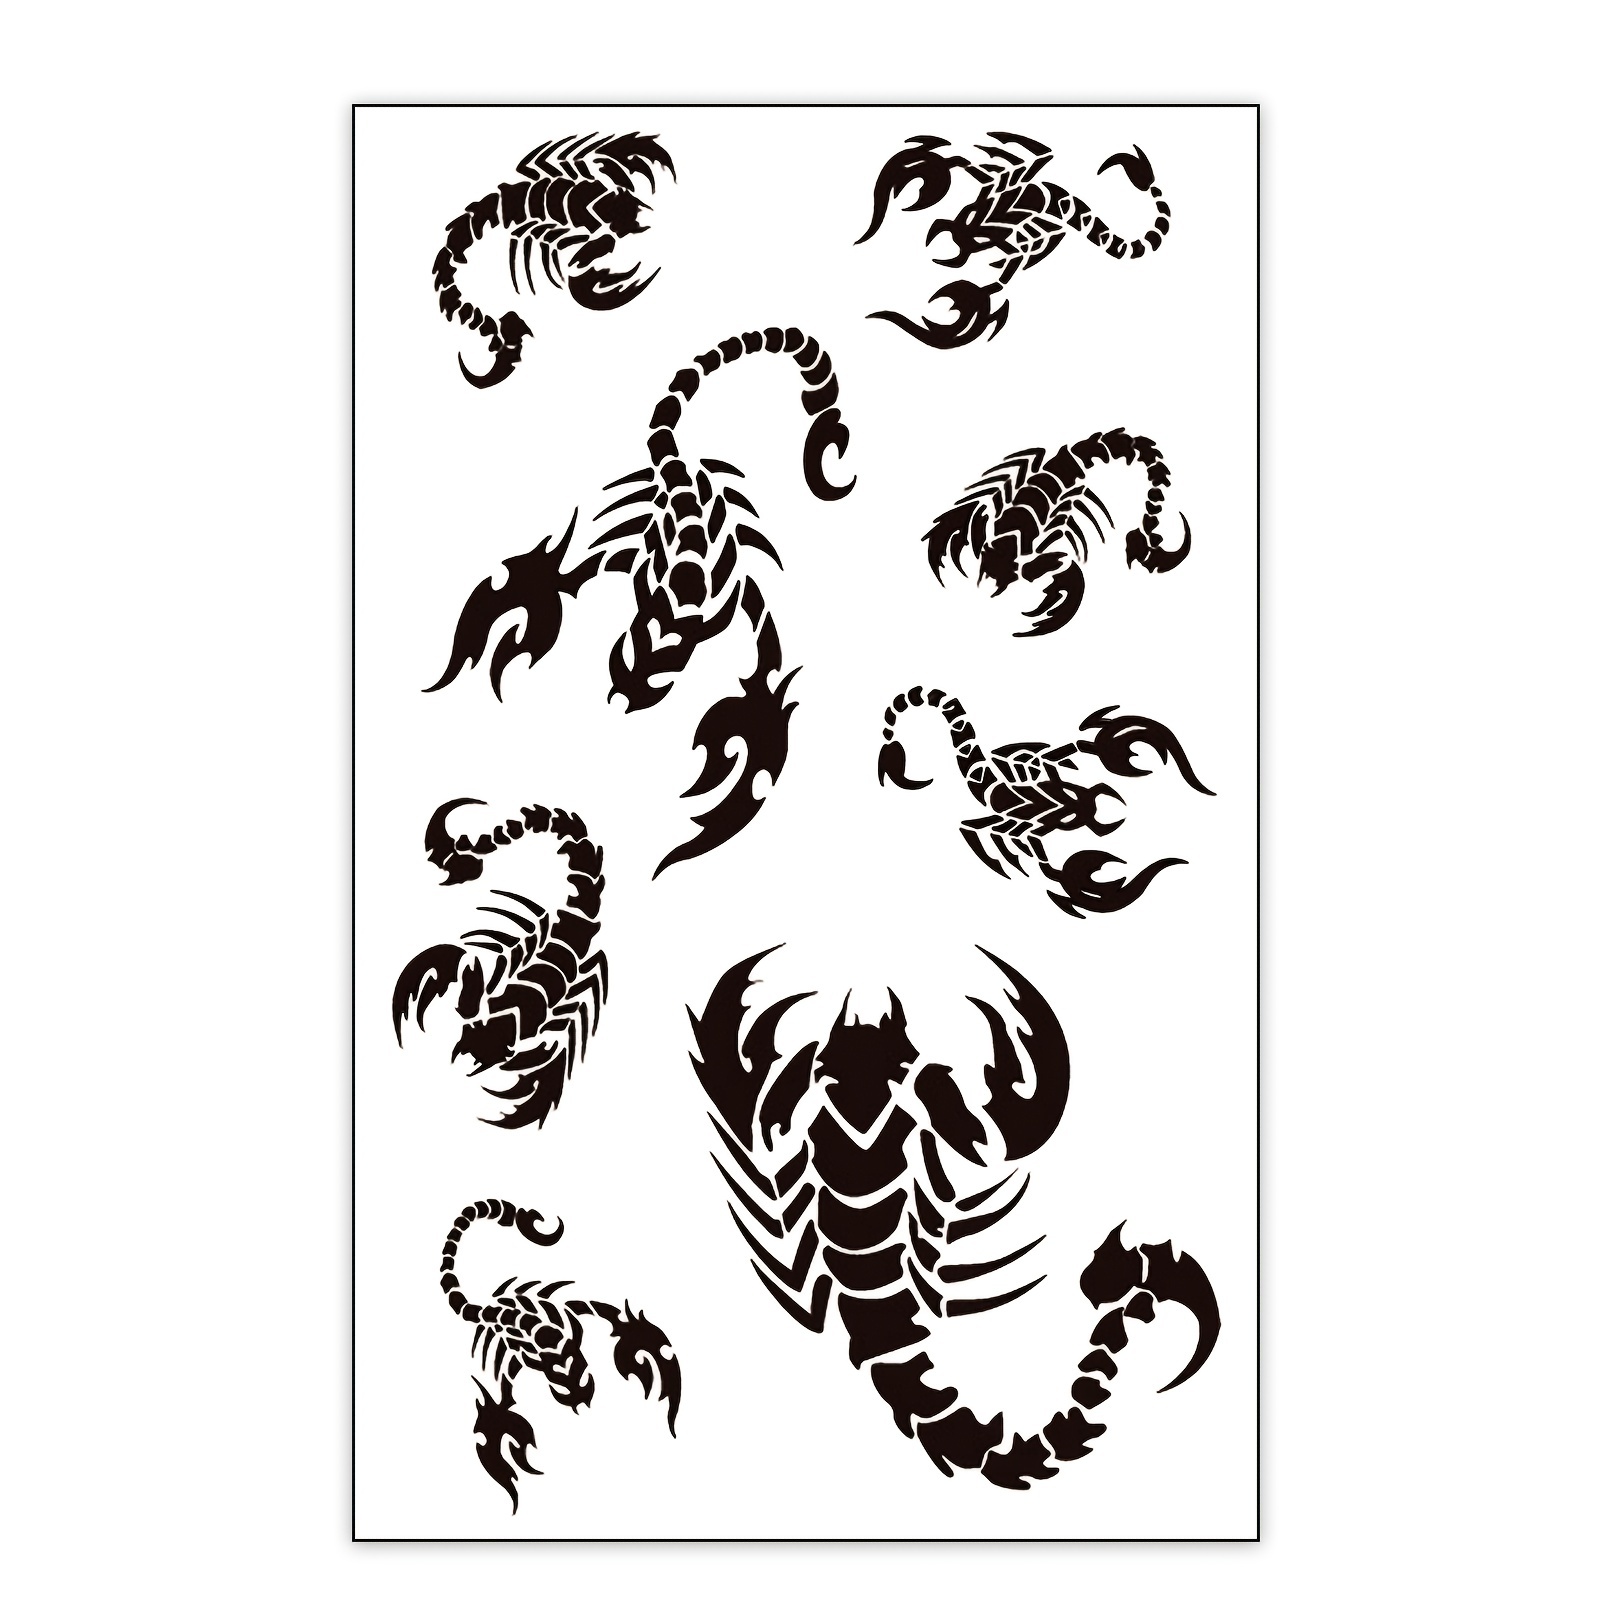 tribal scorpion tattoo on chest